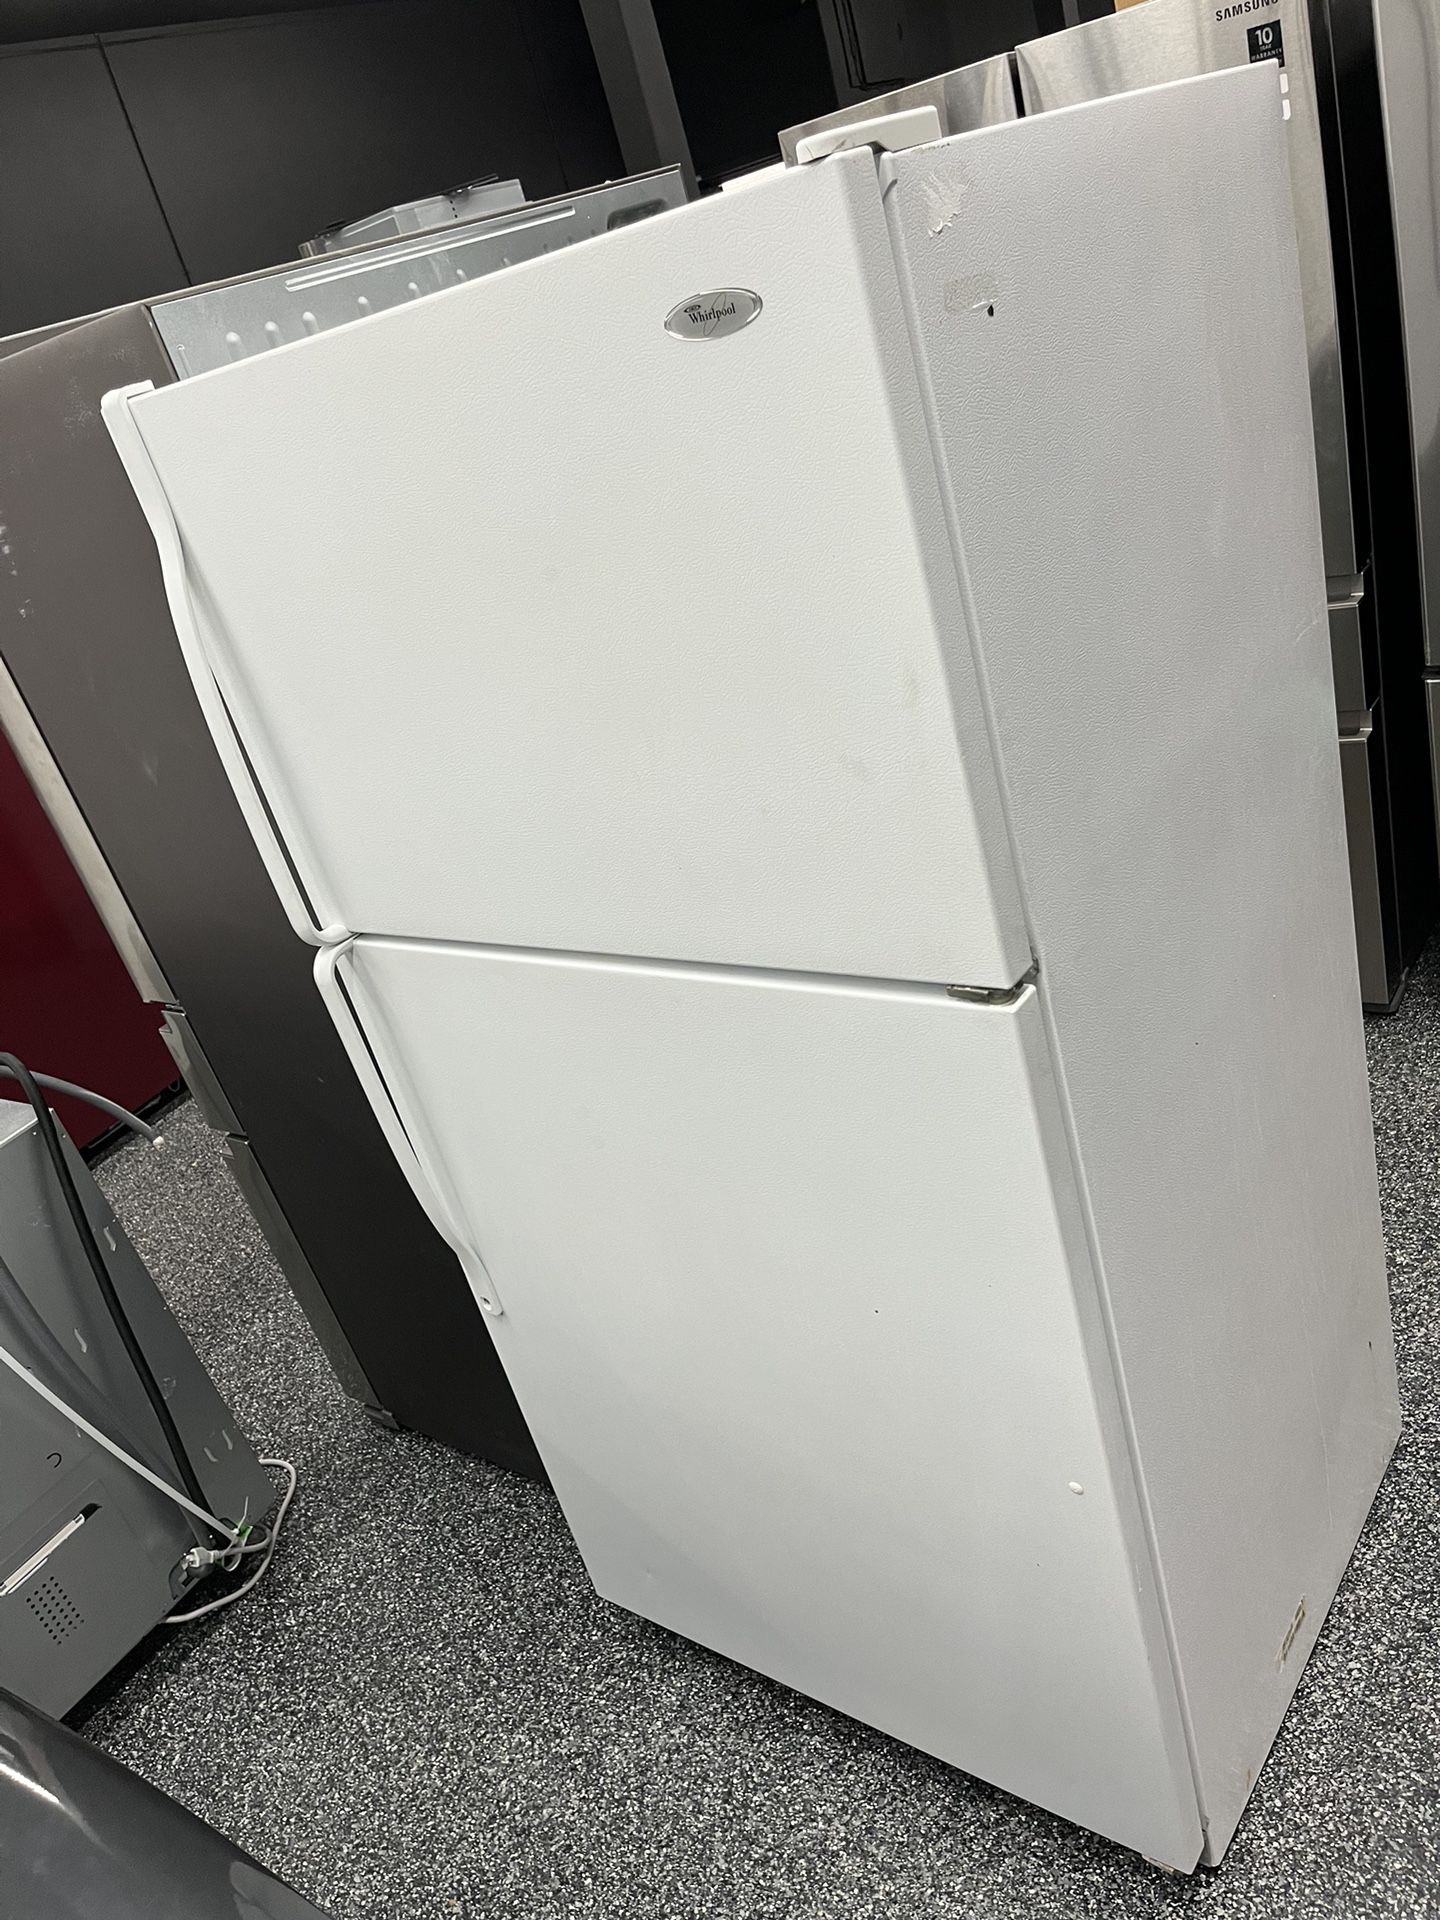 Whirlpool Top Freezer Refrigerator Used 33”